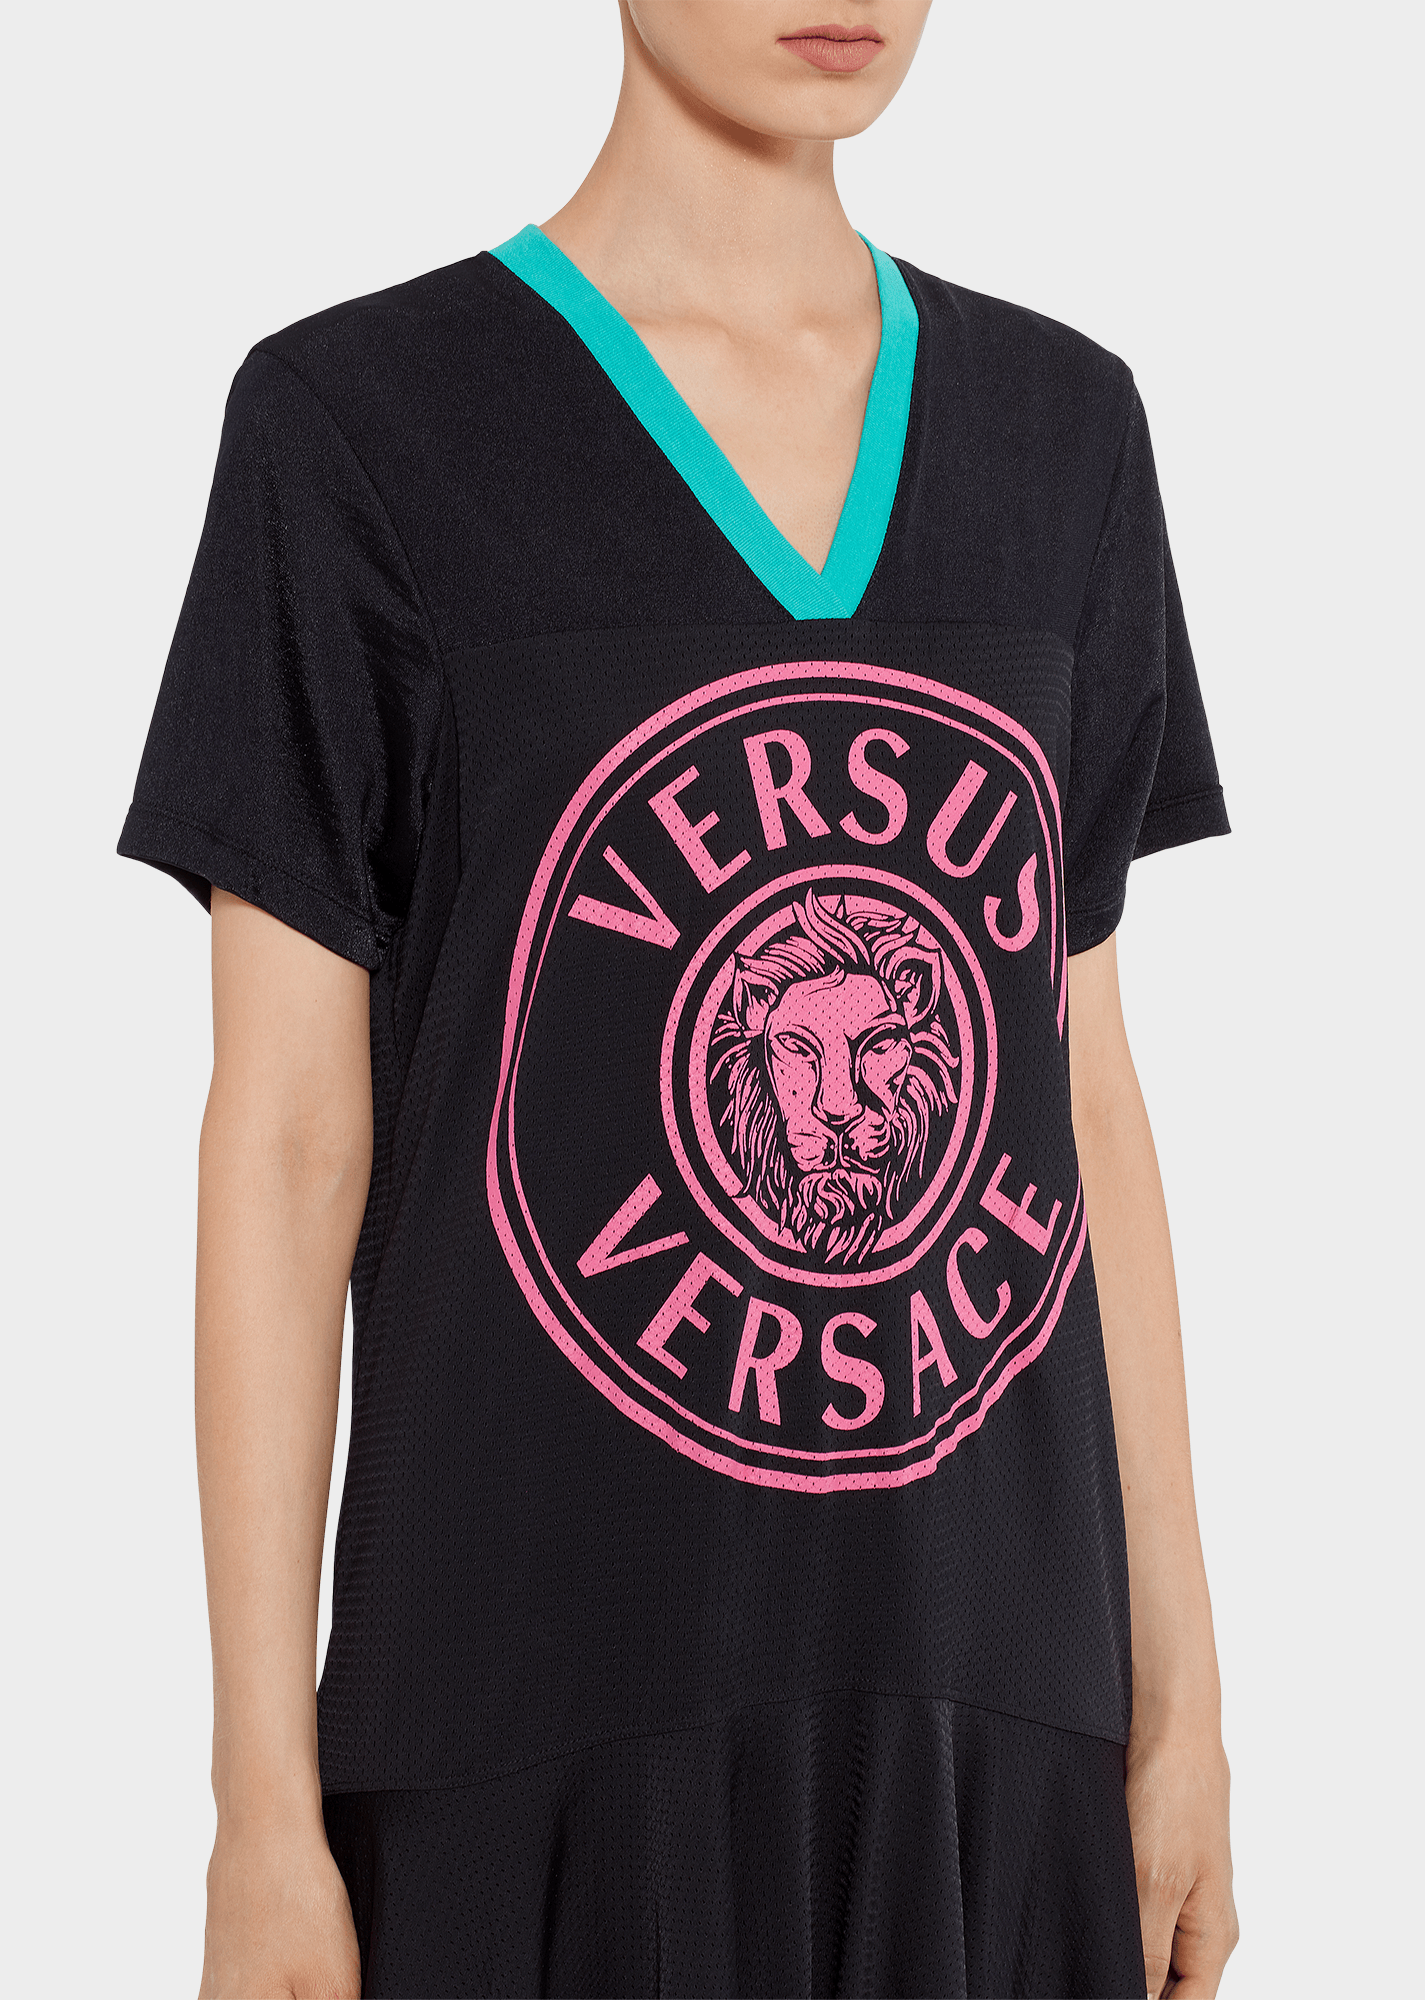 Versace Lion Logo - Versus Versace Contrast Lion Head Logo Dress for Women | US Online Store